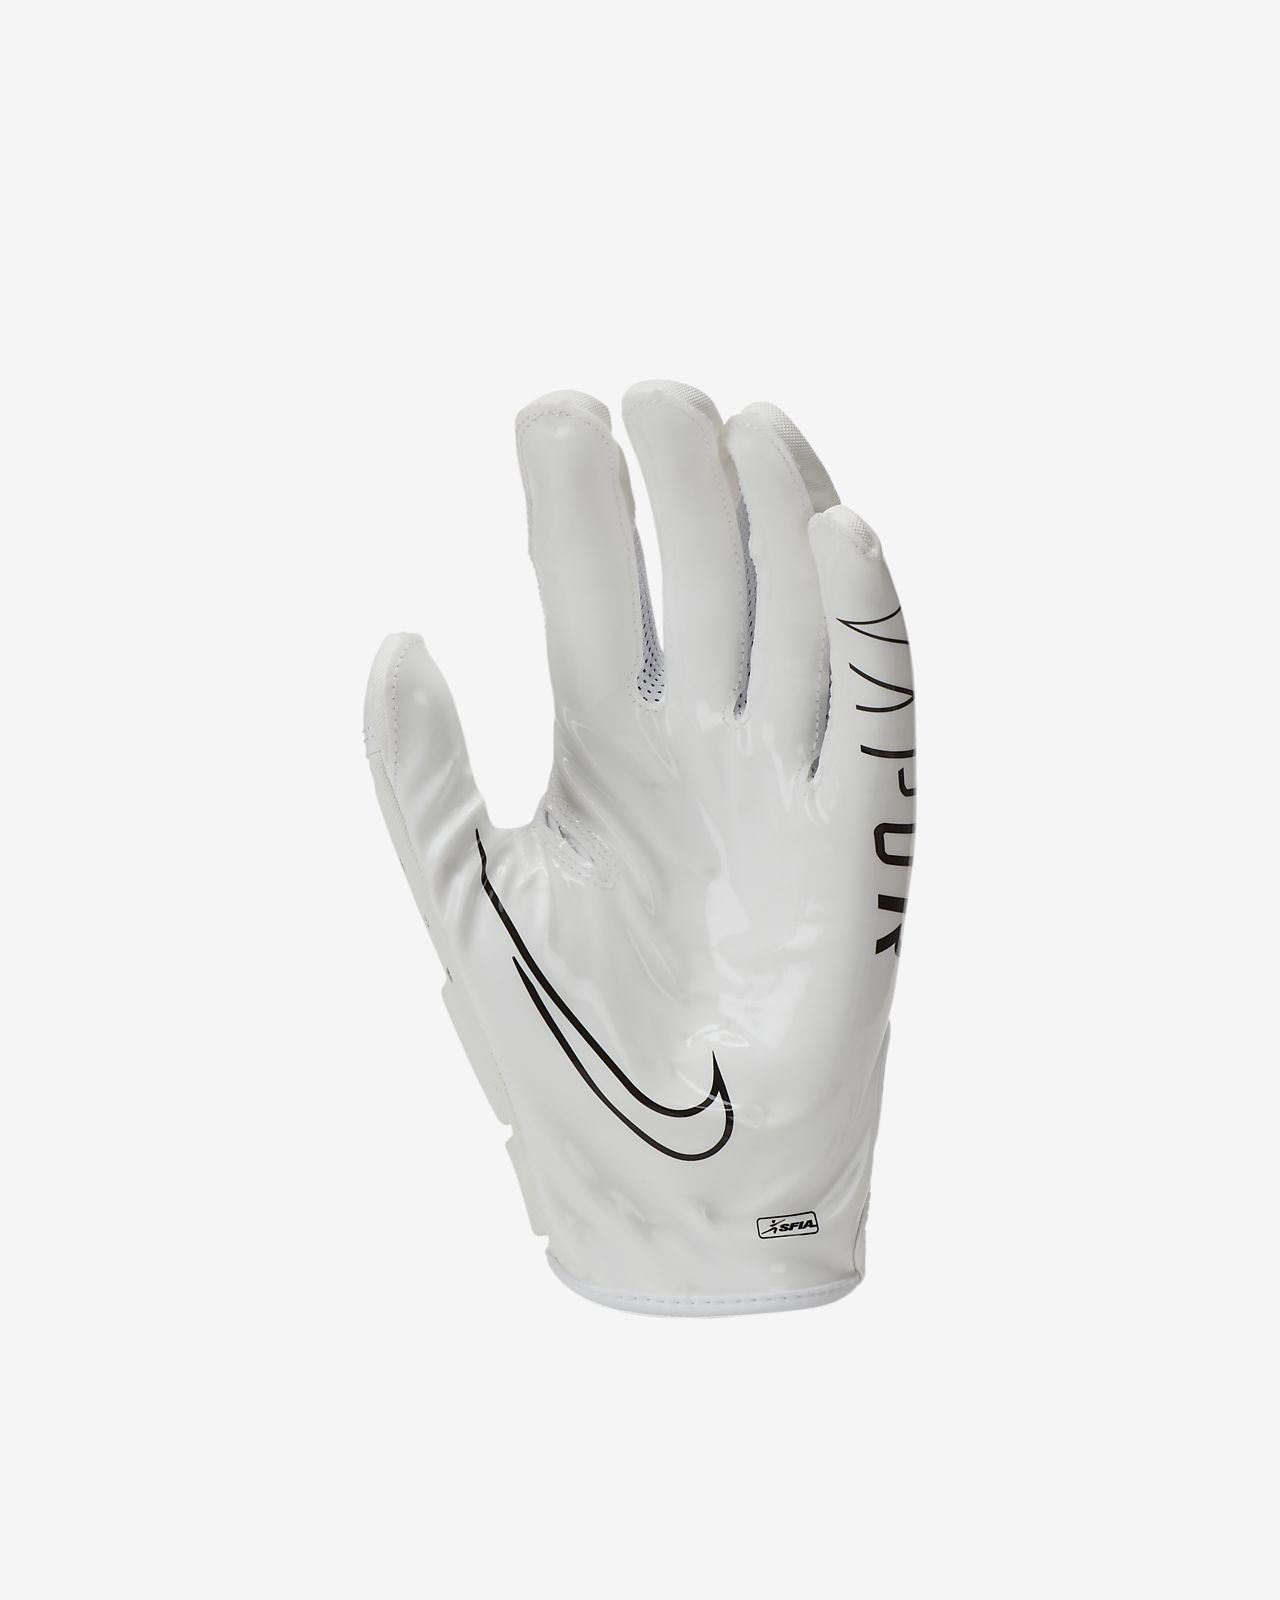 all white receiver gloves